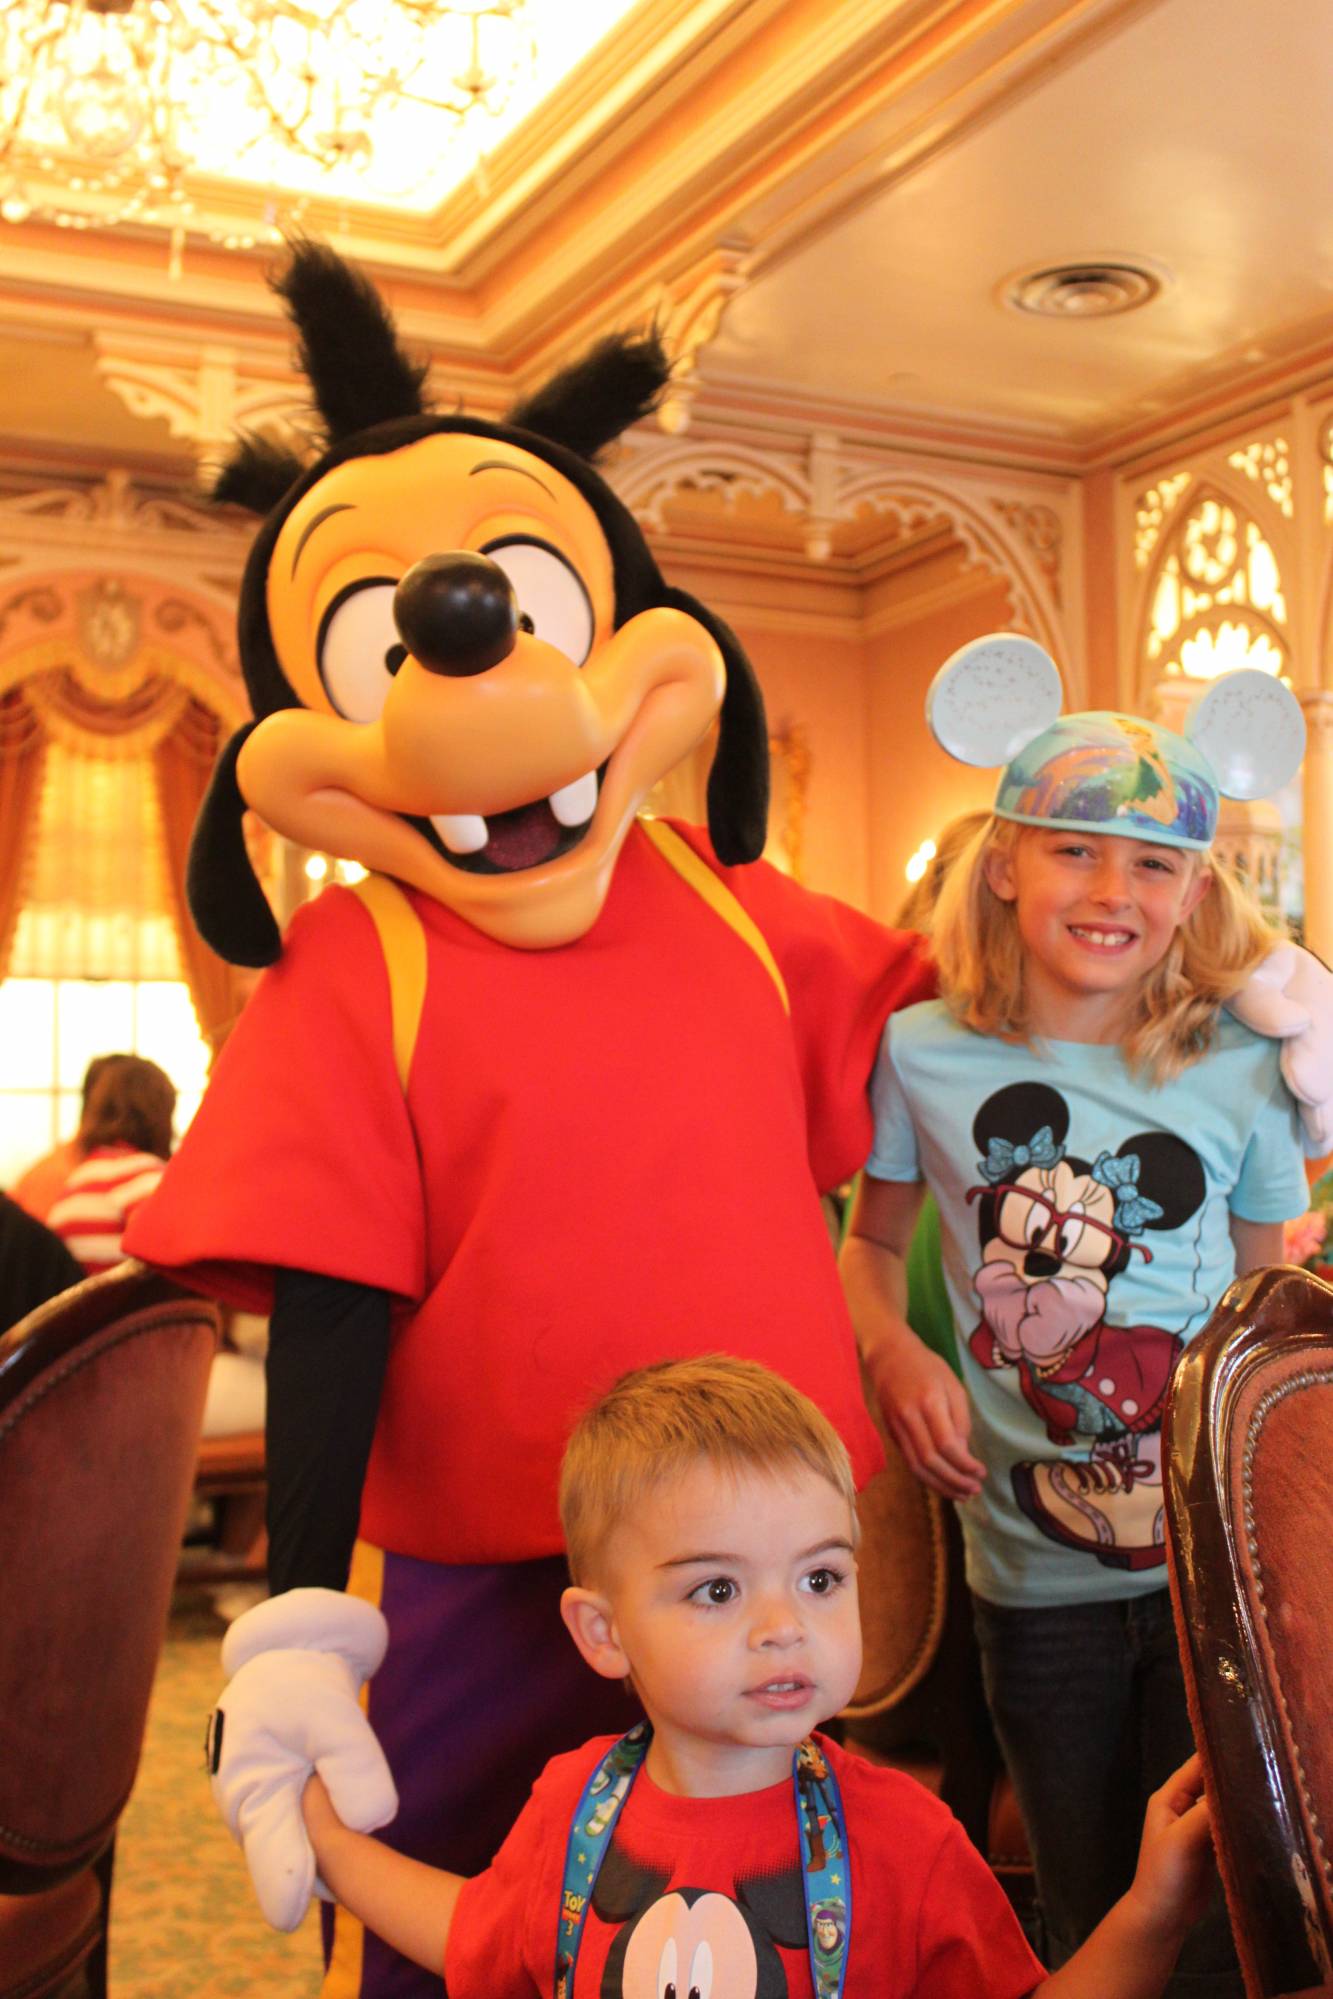 Disneyland - Plaza Inn friends (Goofy's son, Max!)